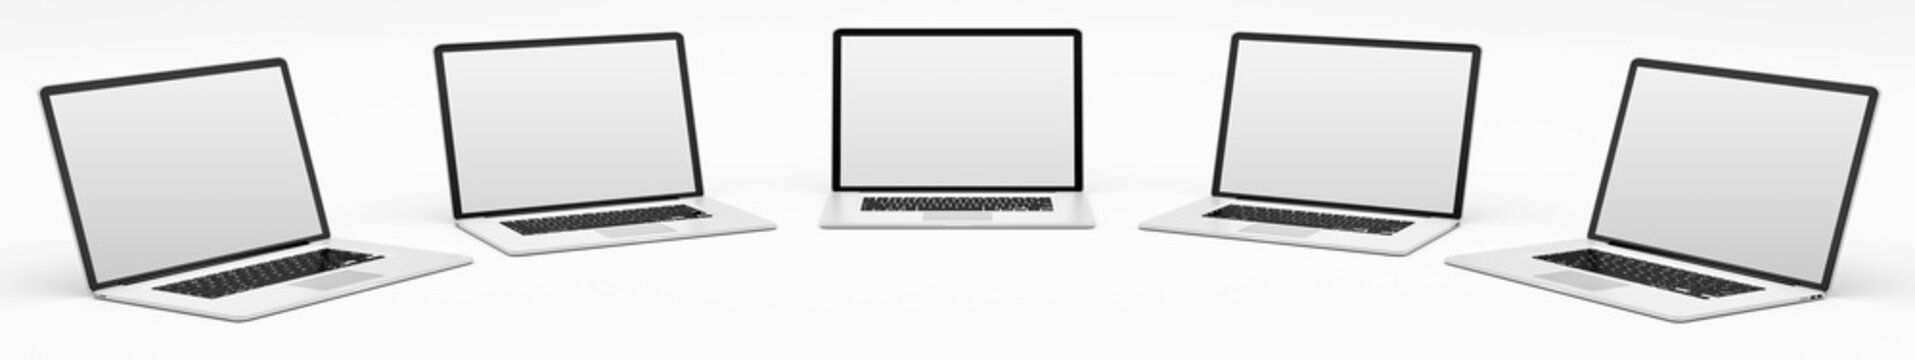 Five modern digital silver and black laptop 3D rendering